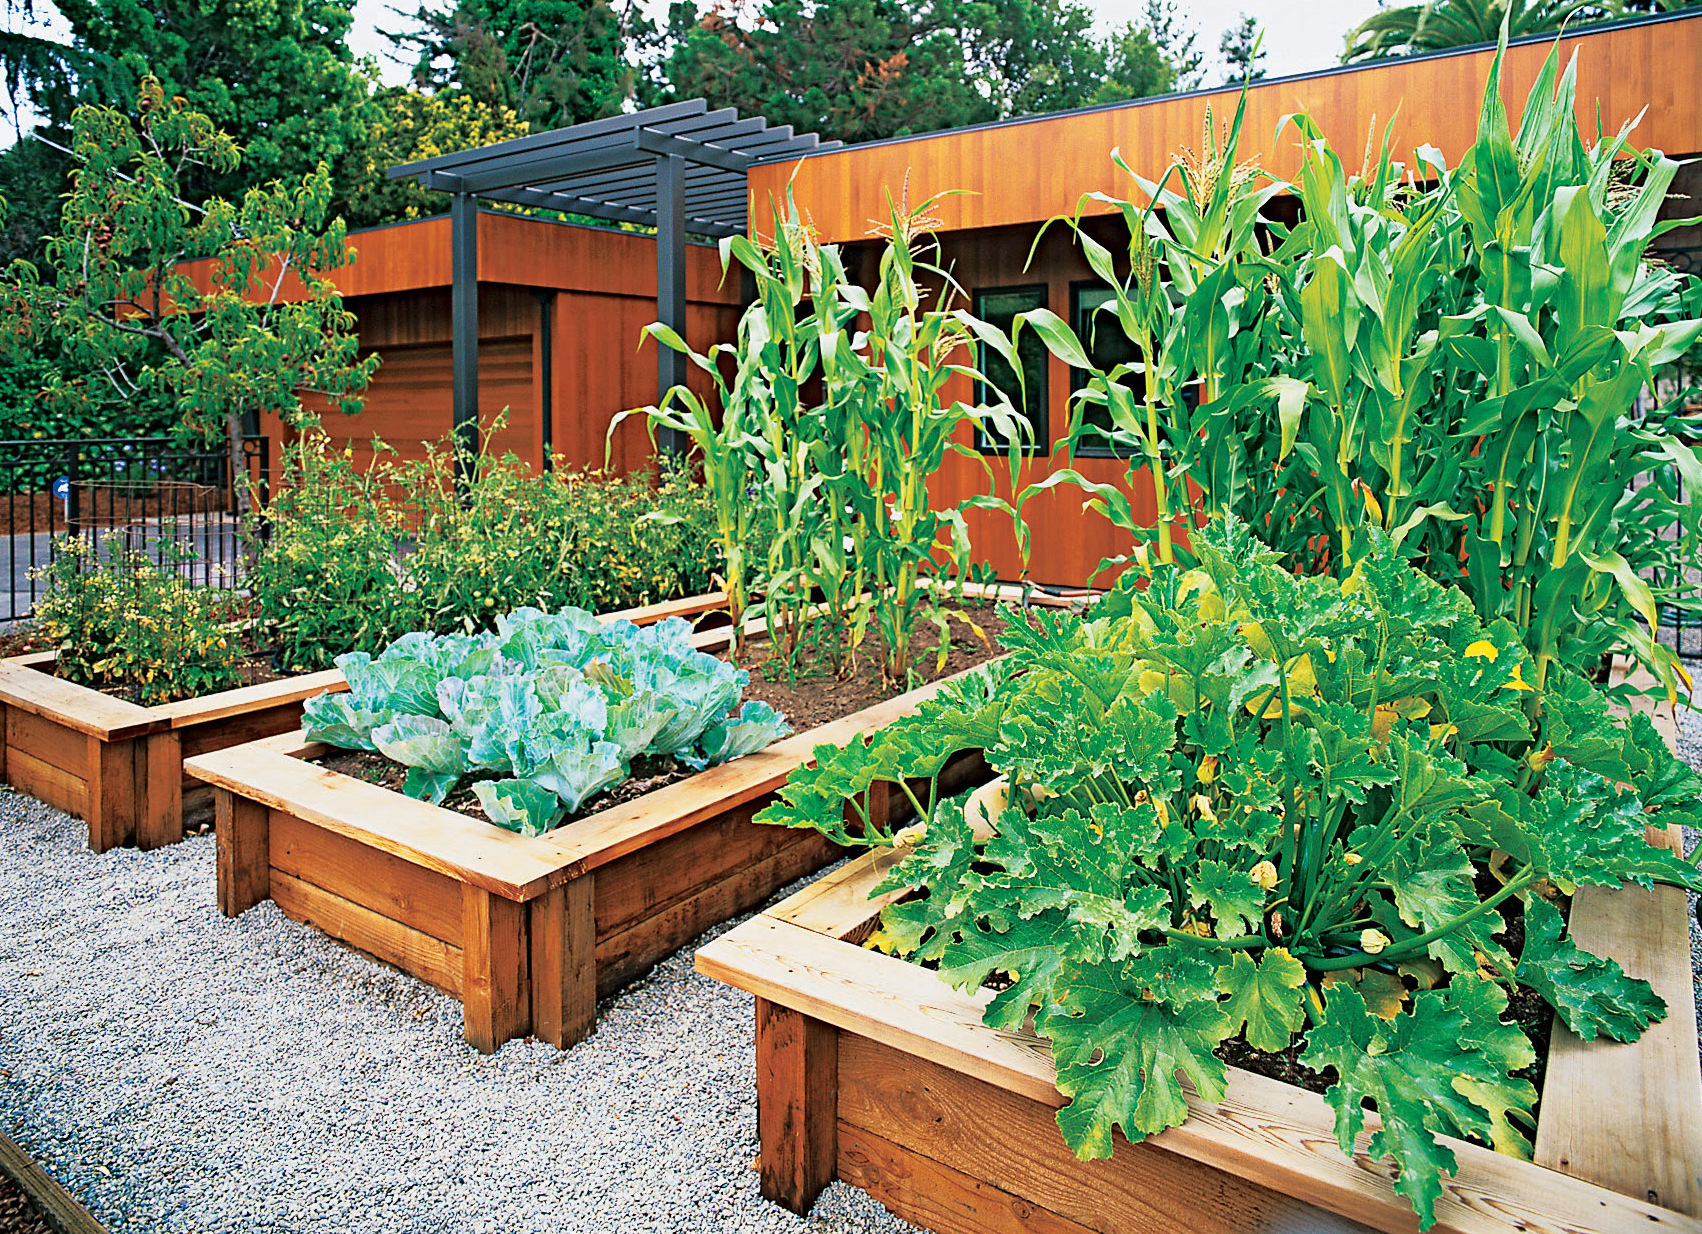 10 Great Front Yard Vegetable Garden Ideas 2020